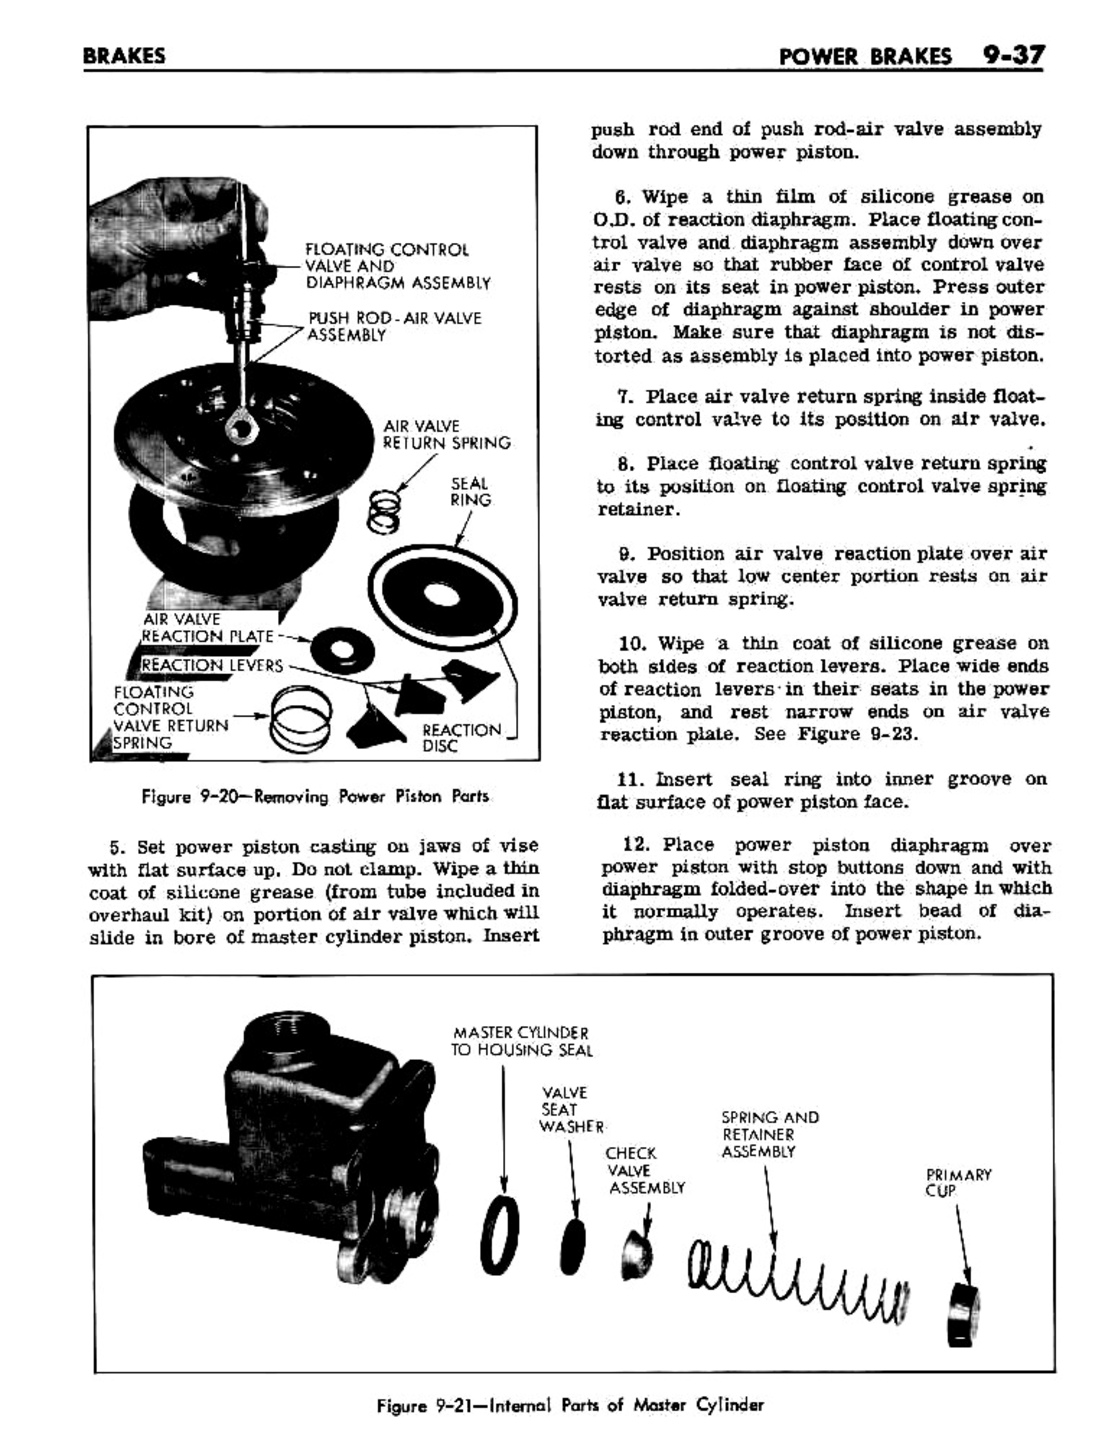 n_09 1961 Buick Shop Manual - Brakes-037-037.jpg